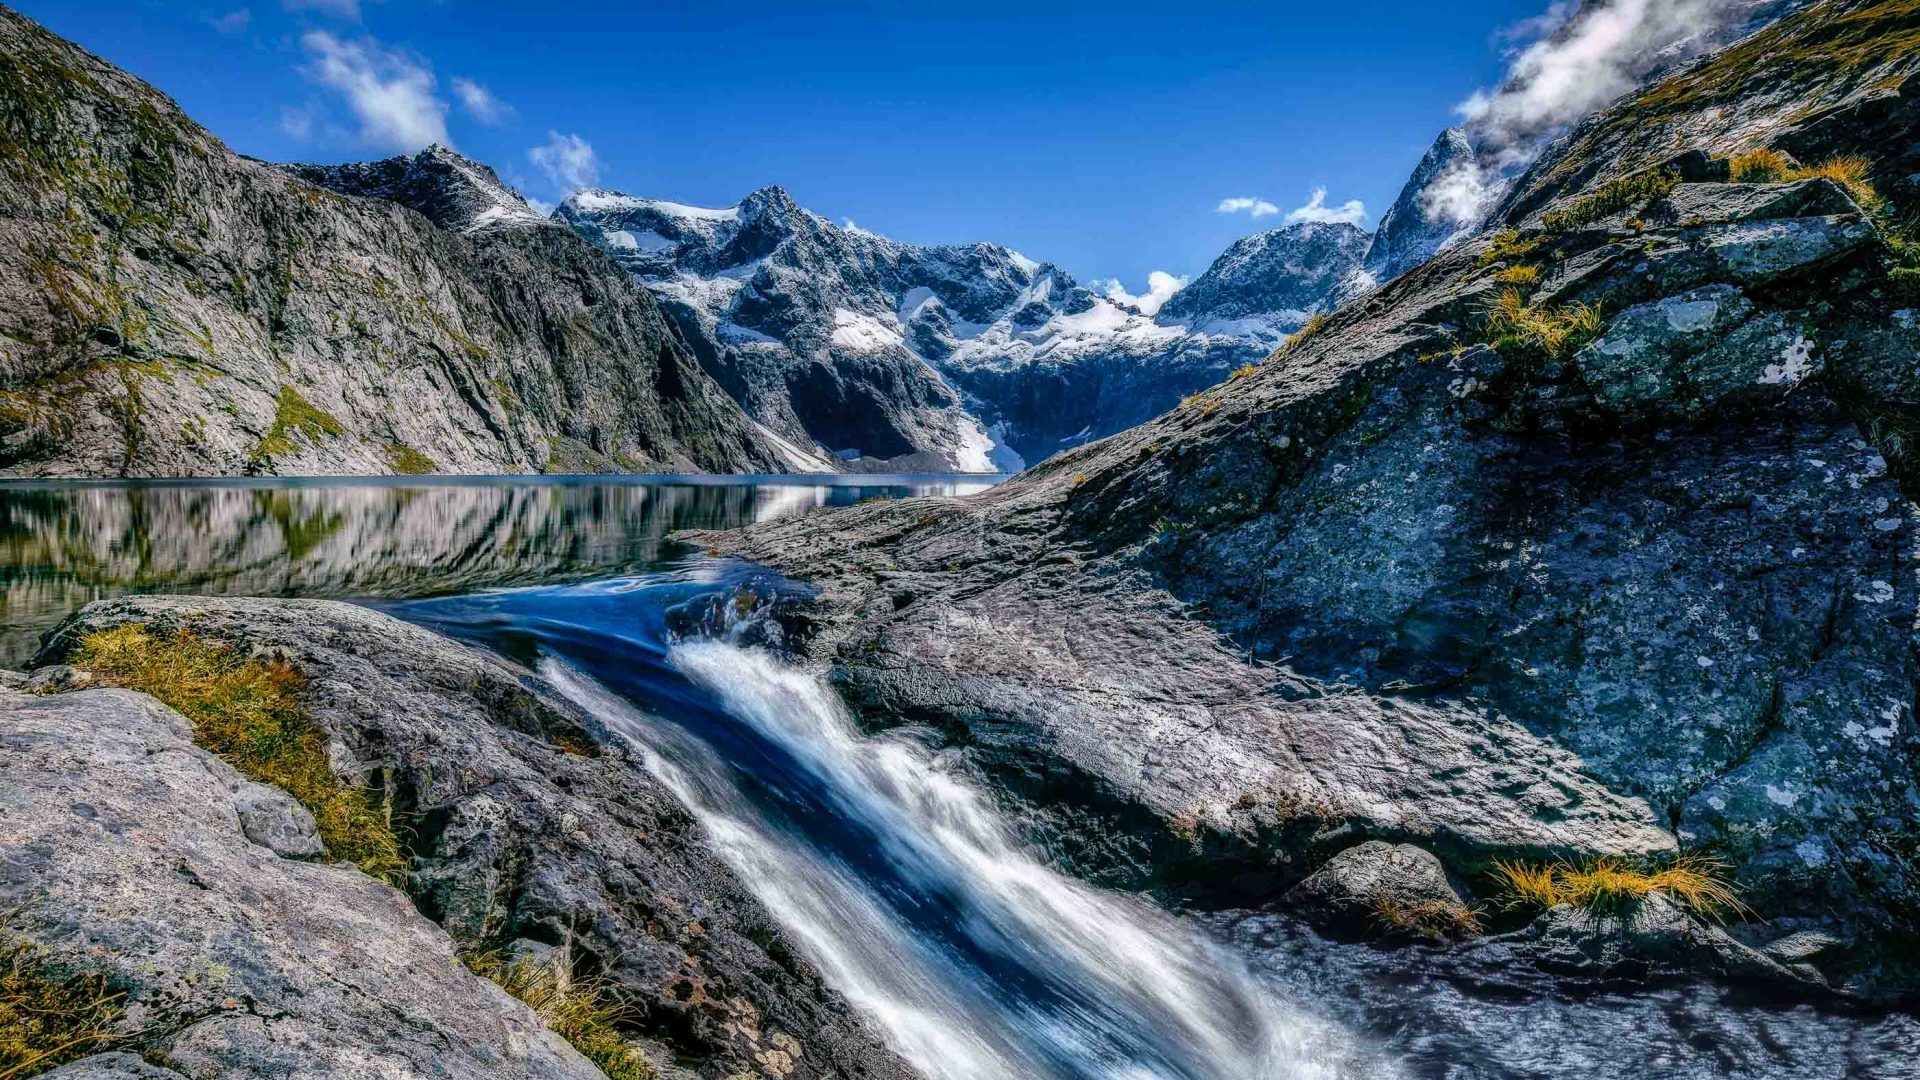 A river flows through Fiordland National Park, New Zealand.